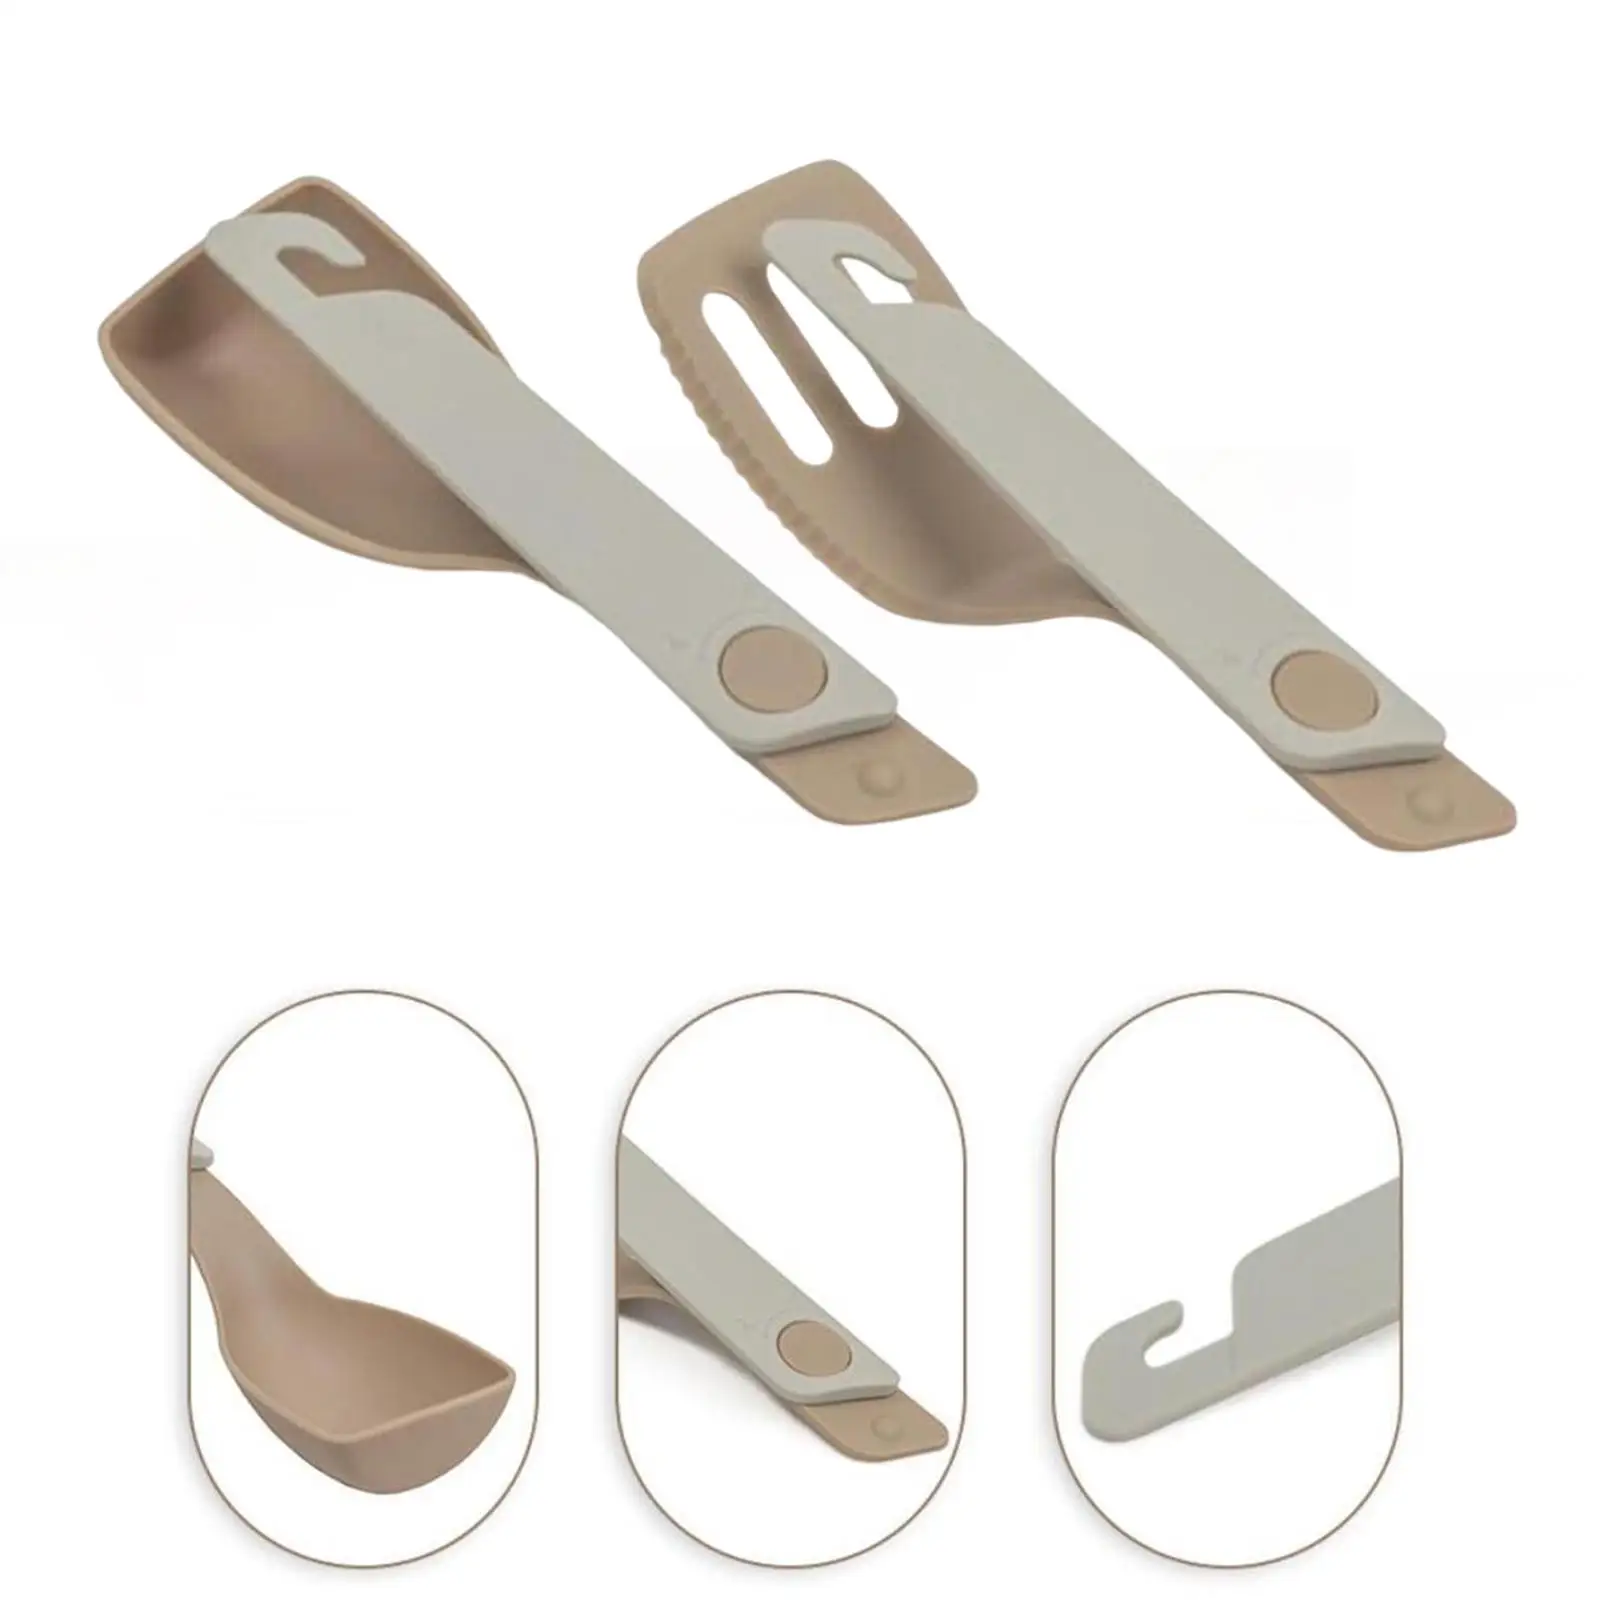 2x Camping Cooking Spoon Shovel Kitchen Utensils Folding Tableware Picnic